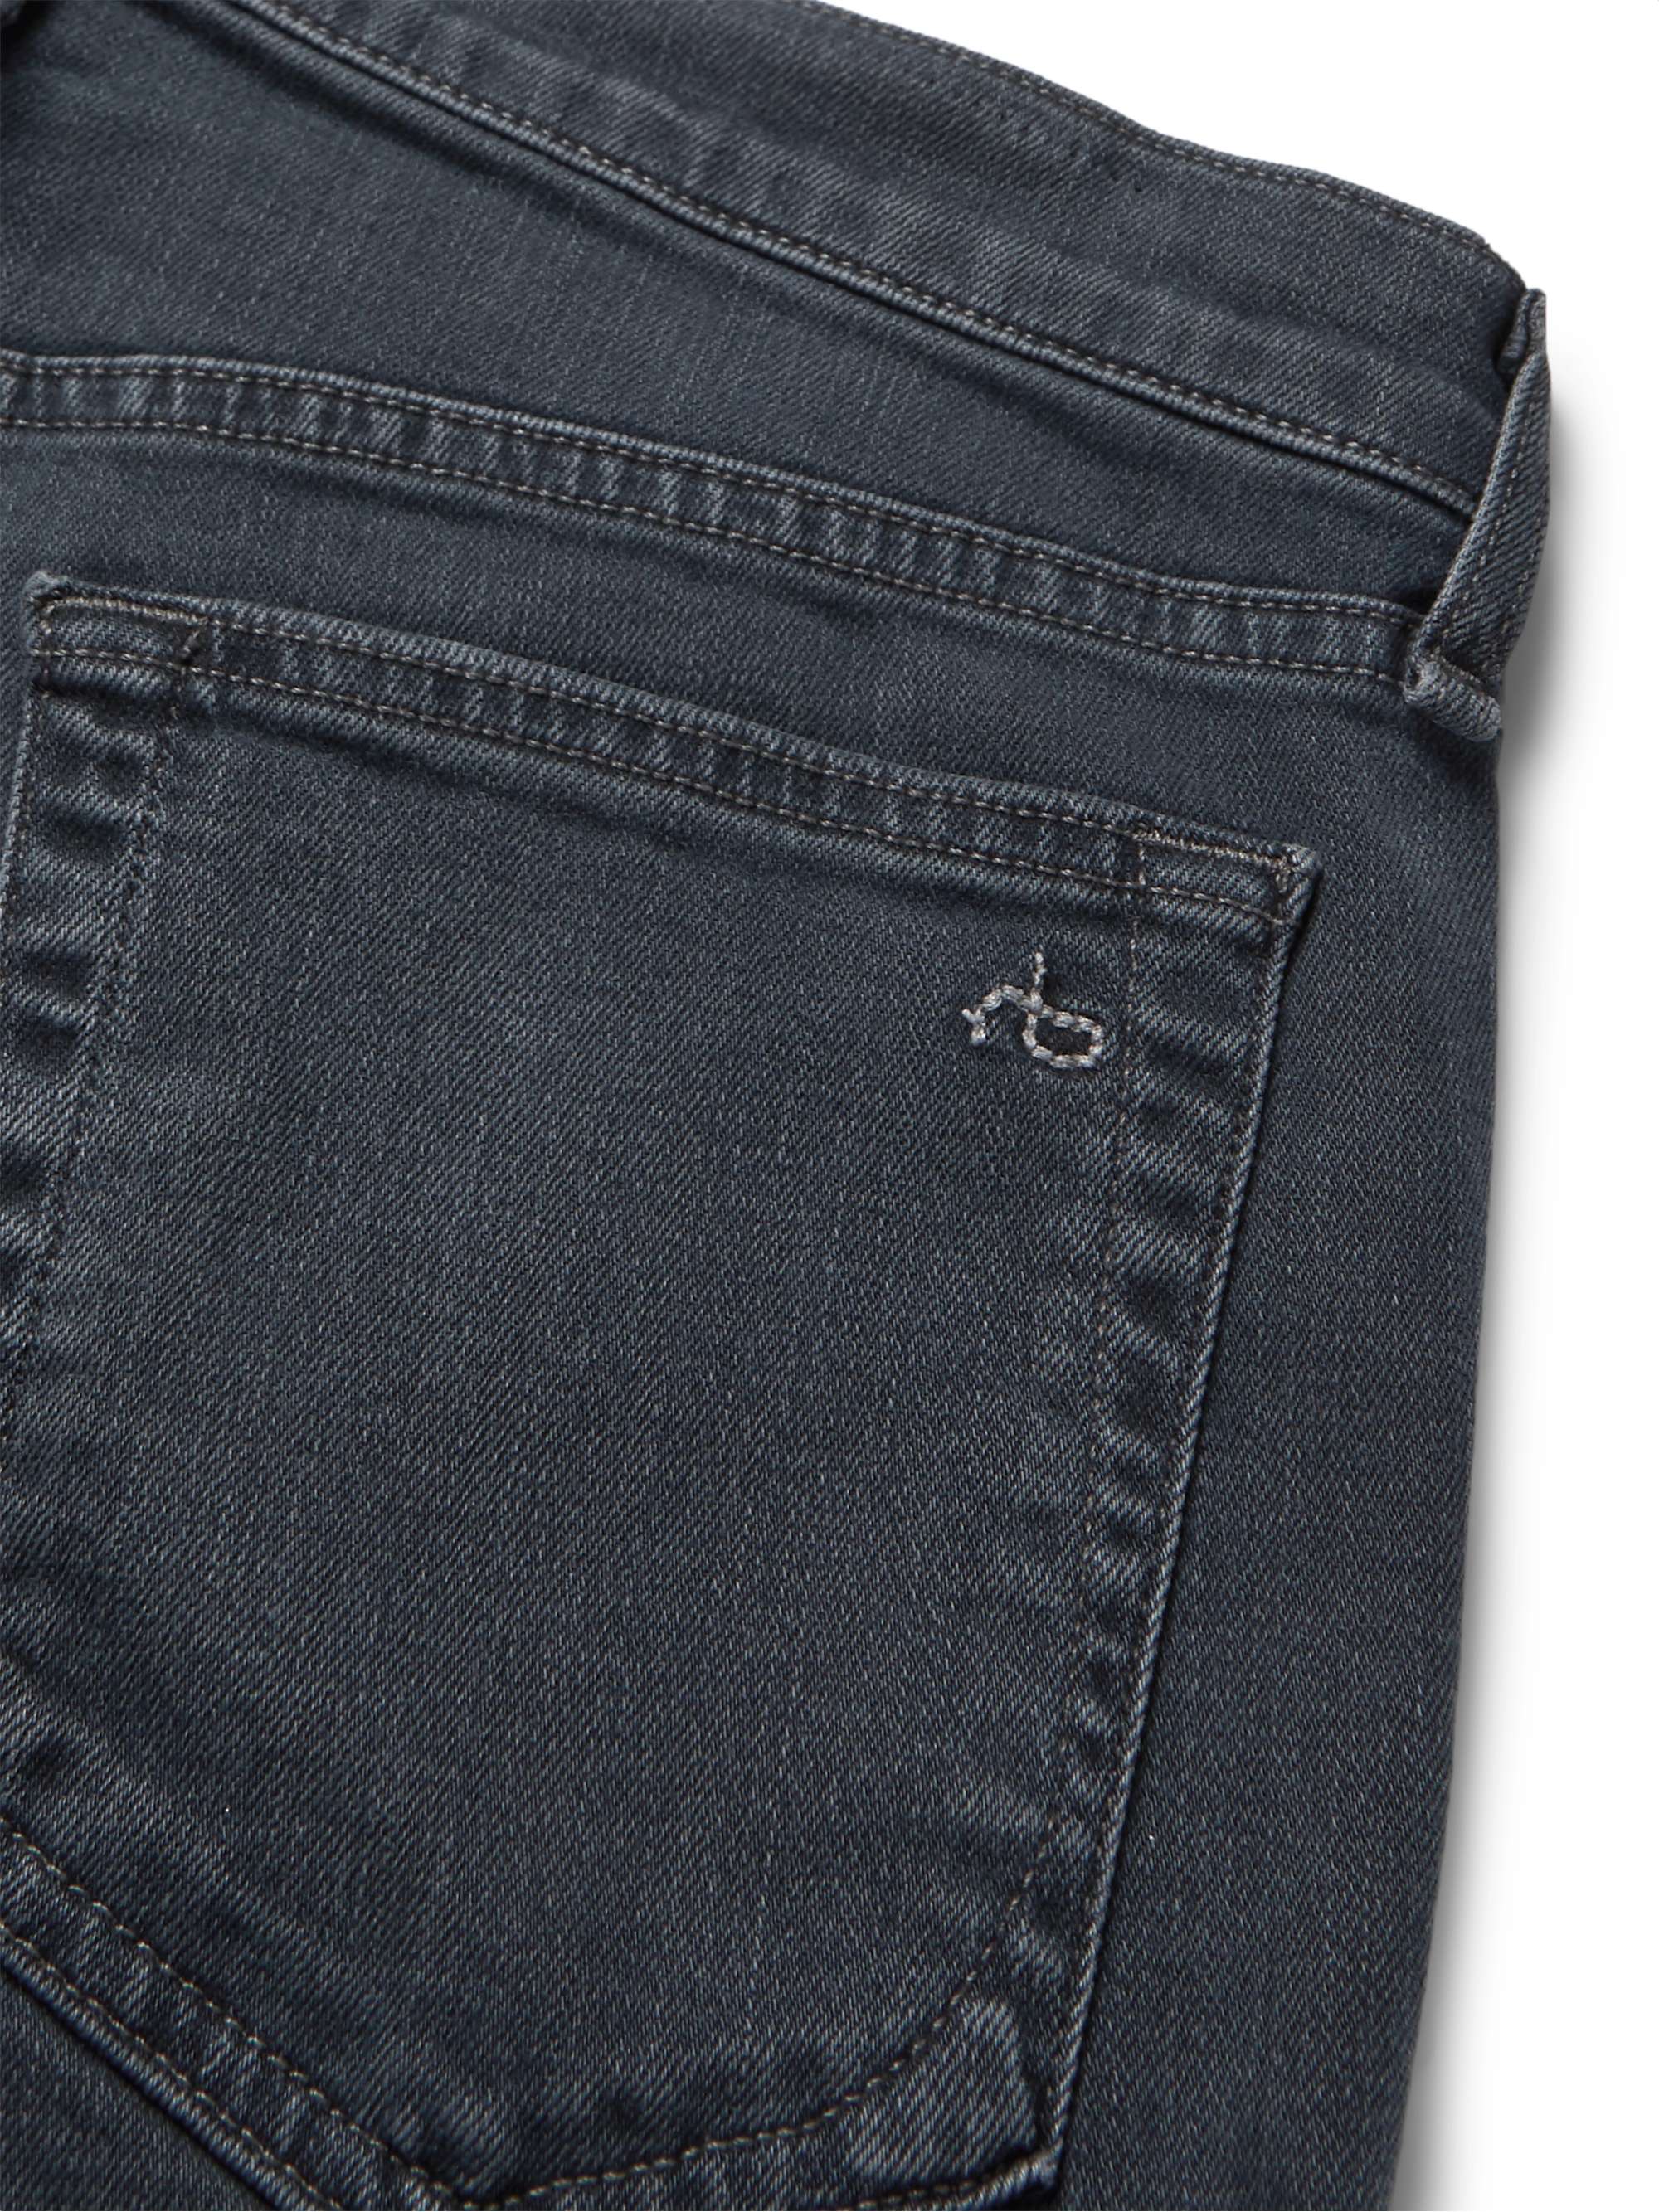 RAG & BONE Fit 2 Slim-Fit Stretch-Denim Jeans | MR PORTER